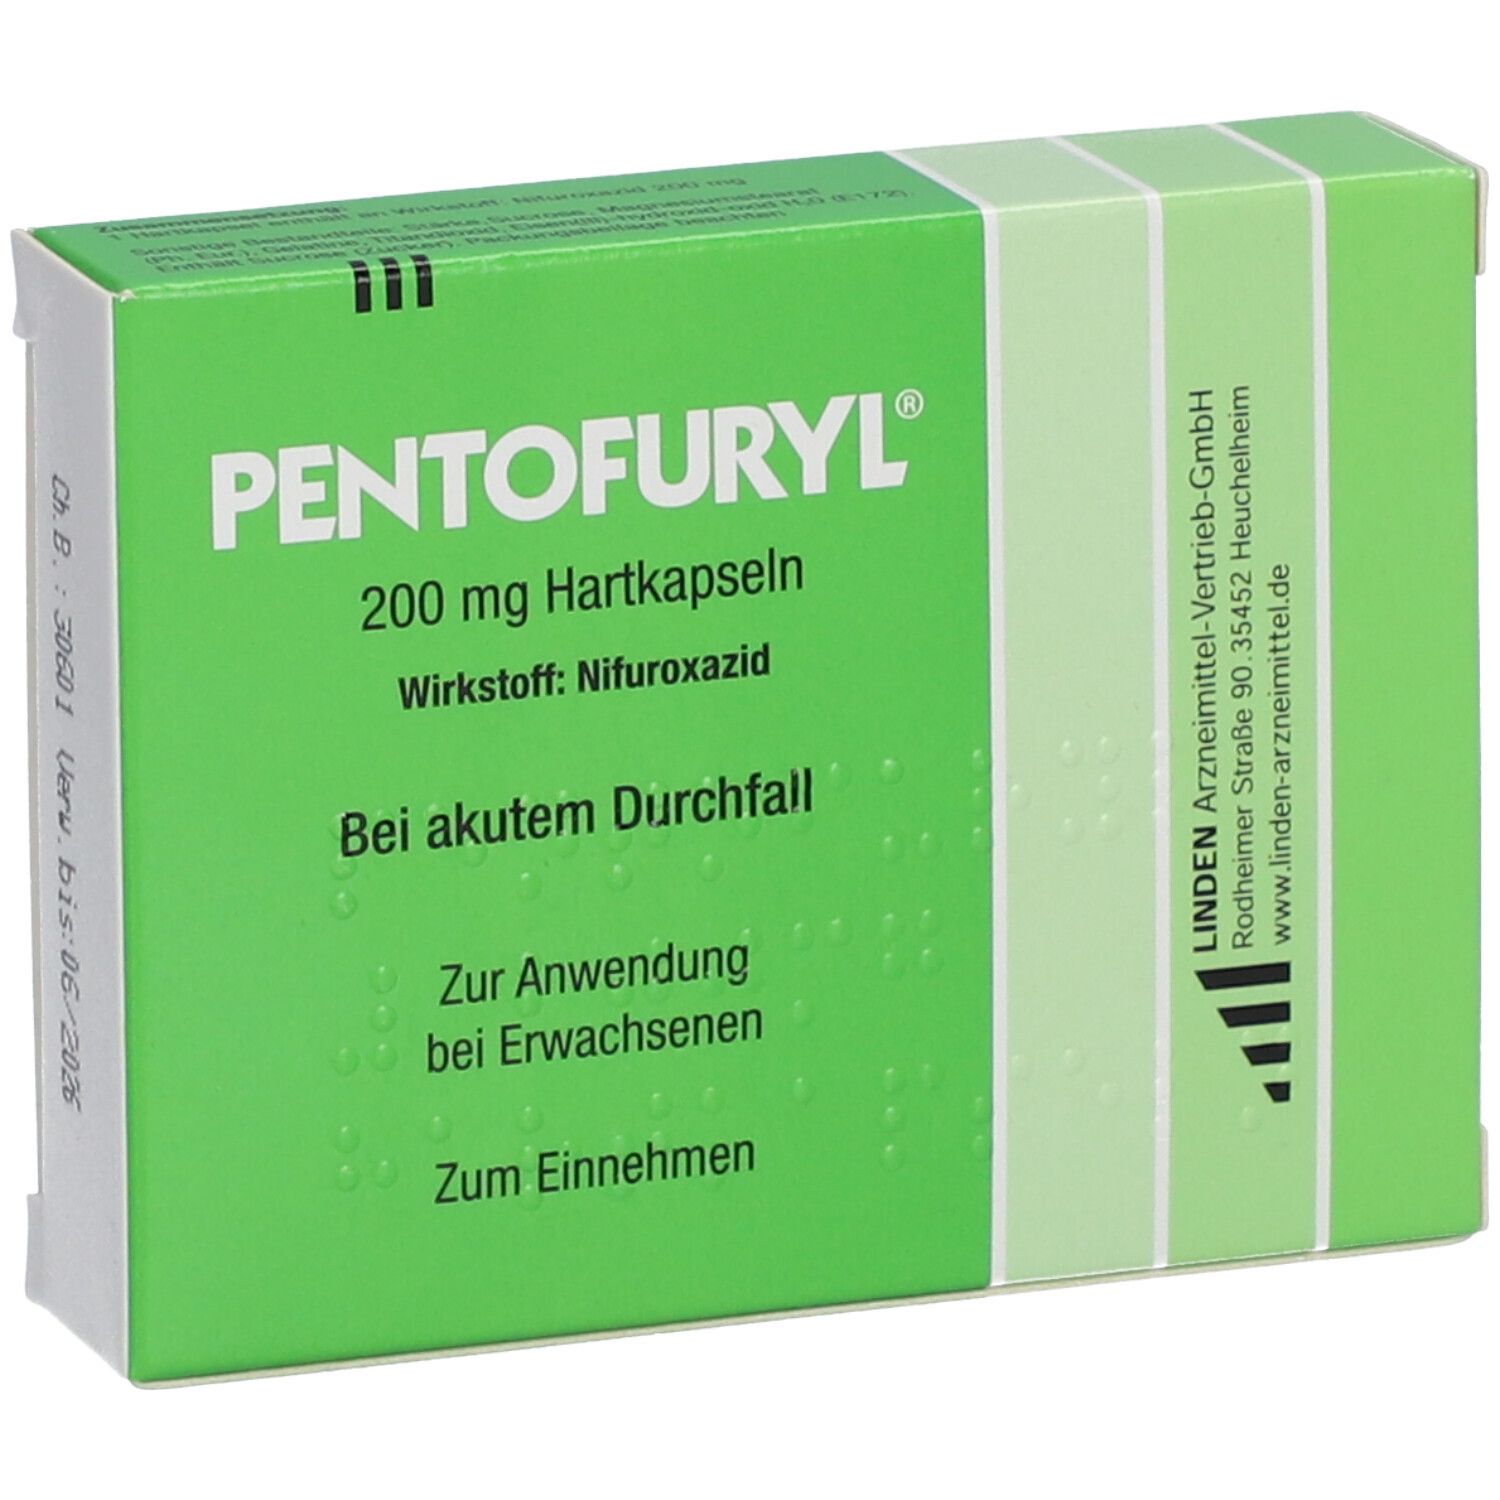 PENTOFURYL® 200 mg Hartkapseln